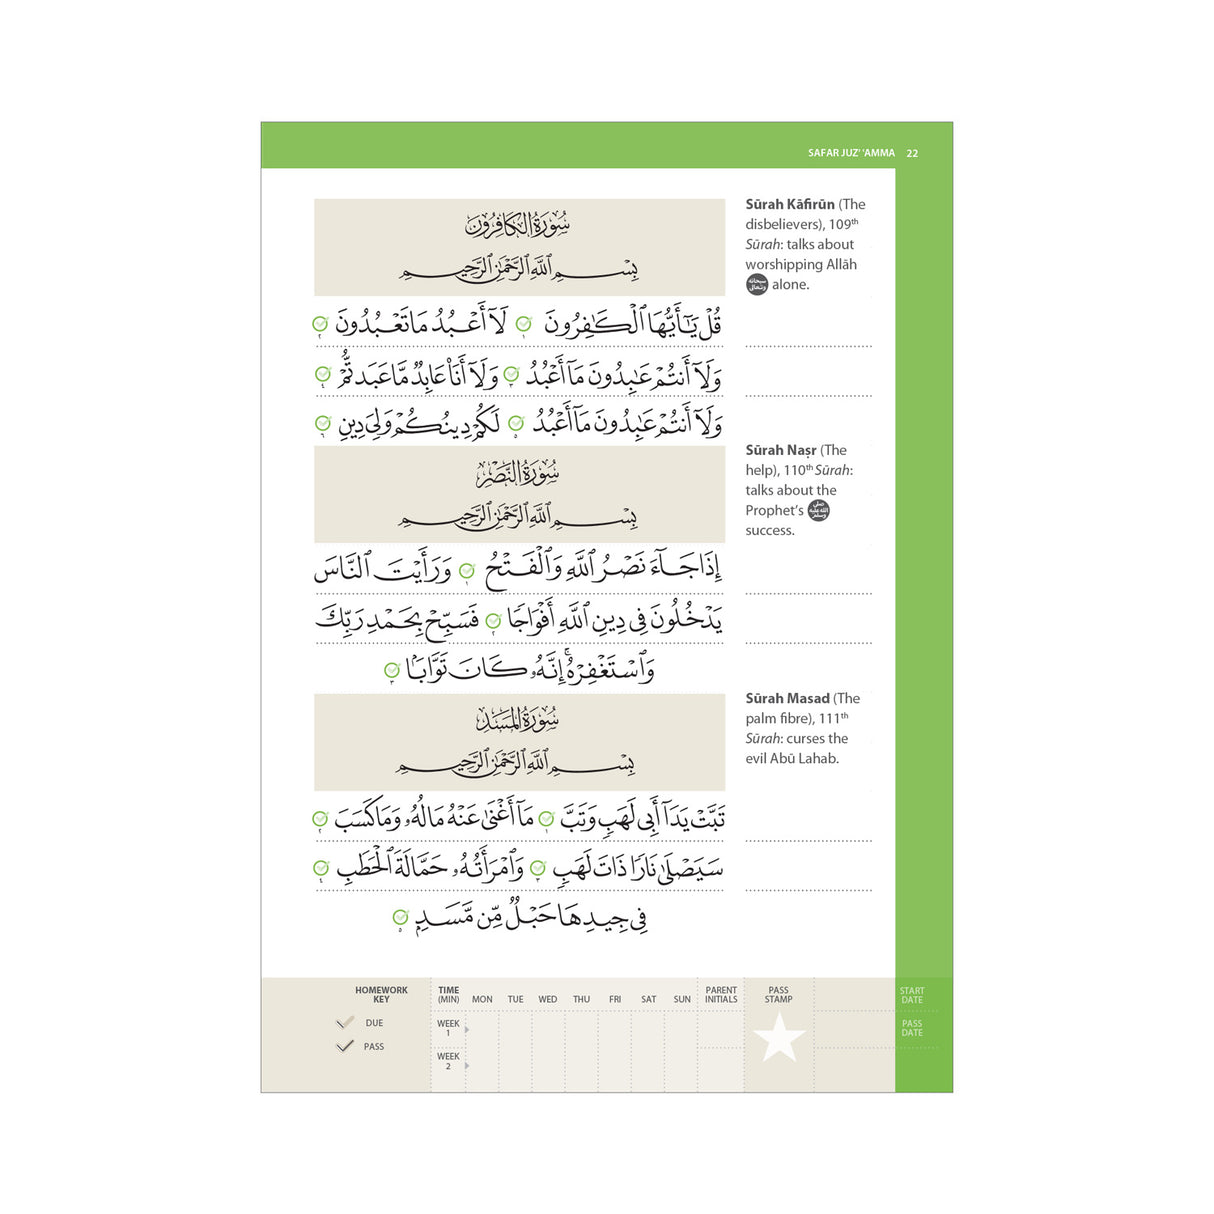 Juz Amma Madinah Script – Learn to Read Series